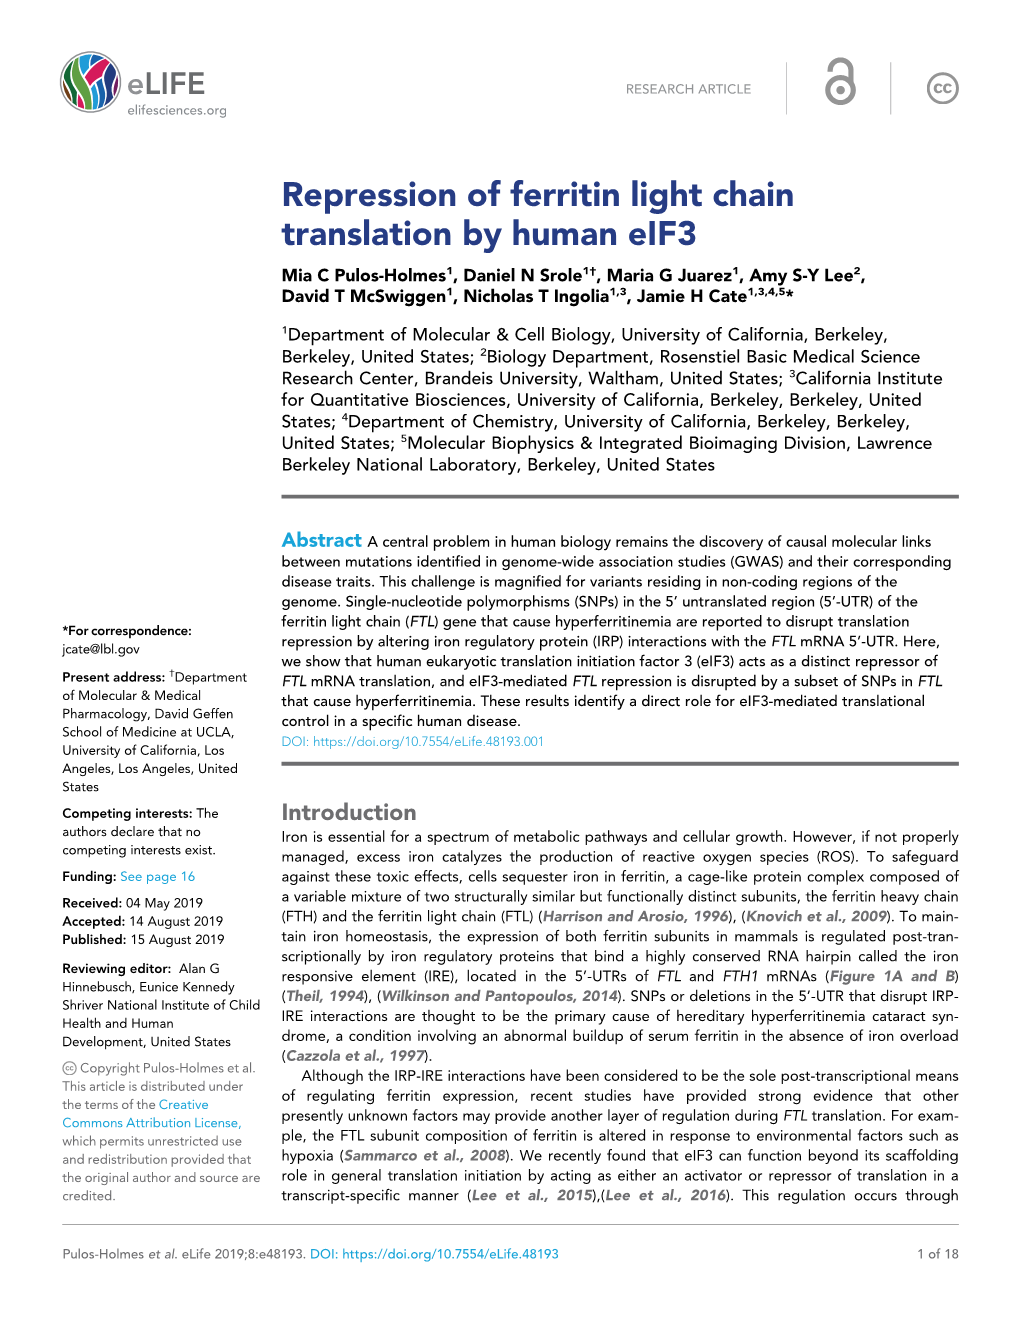 Repression of Ferritin Light Chain Translation by Human Eif3